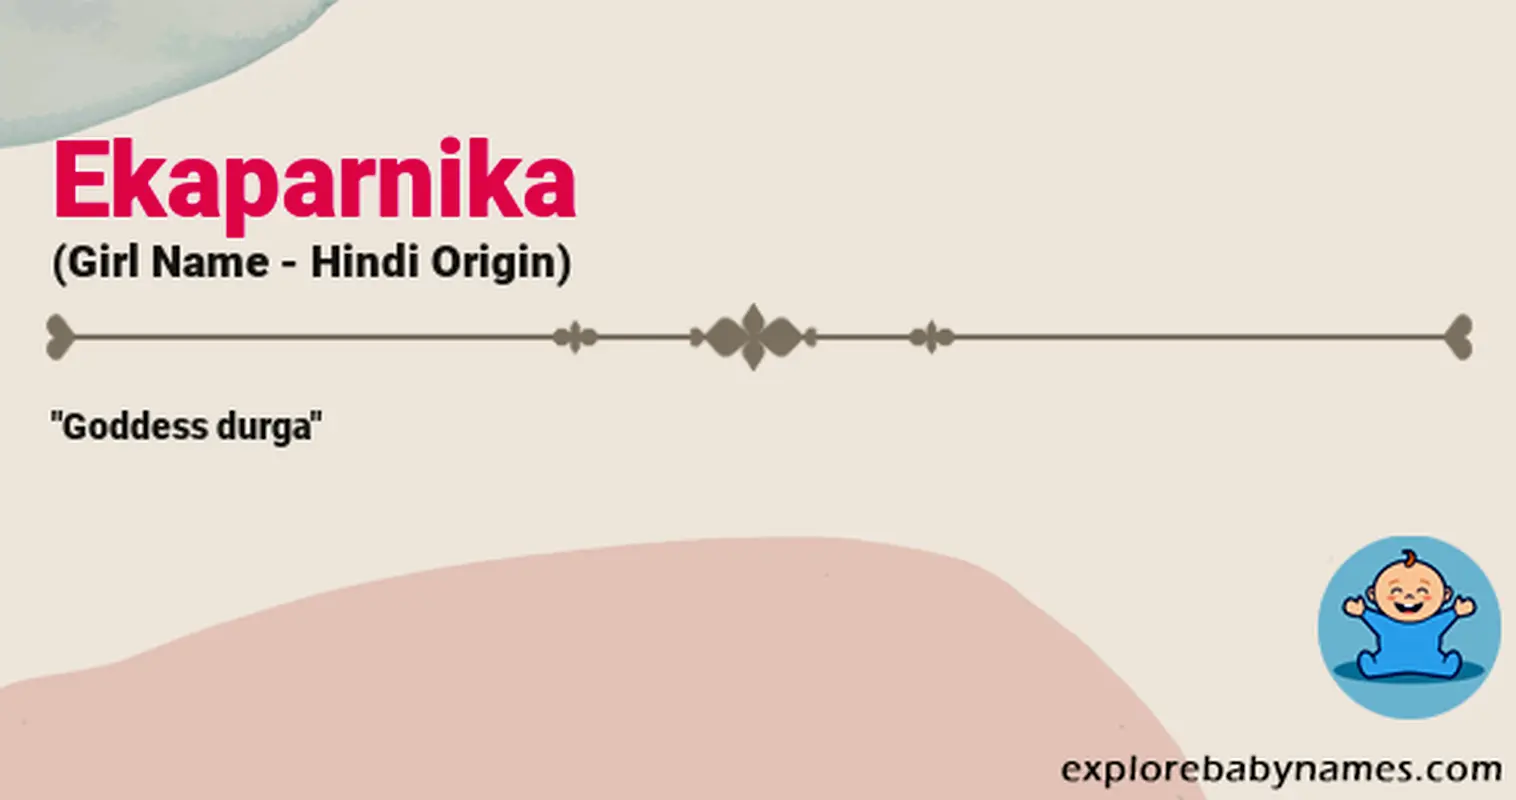 Meaning of Ekaparnika